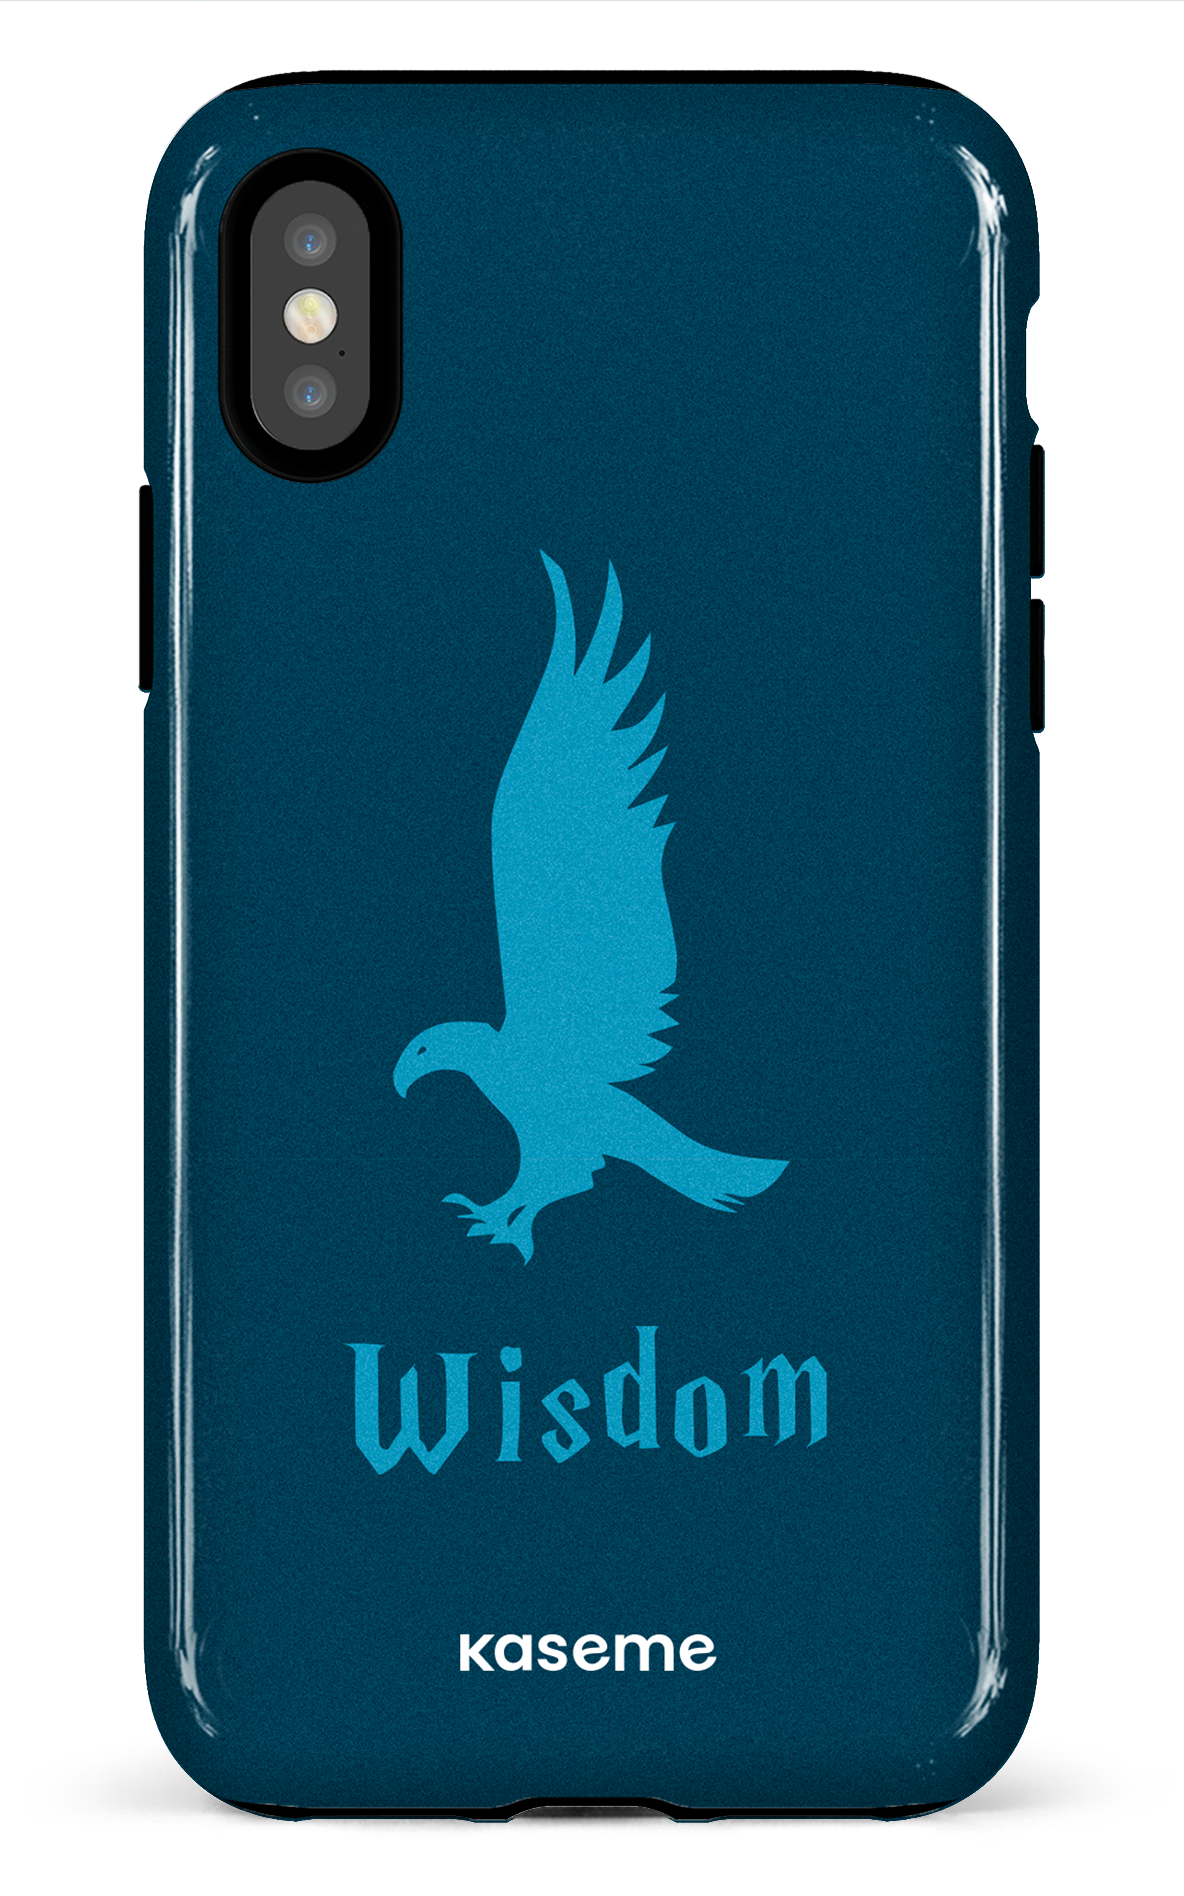 Wisdom - iPhone X/XS